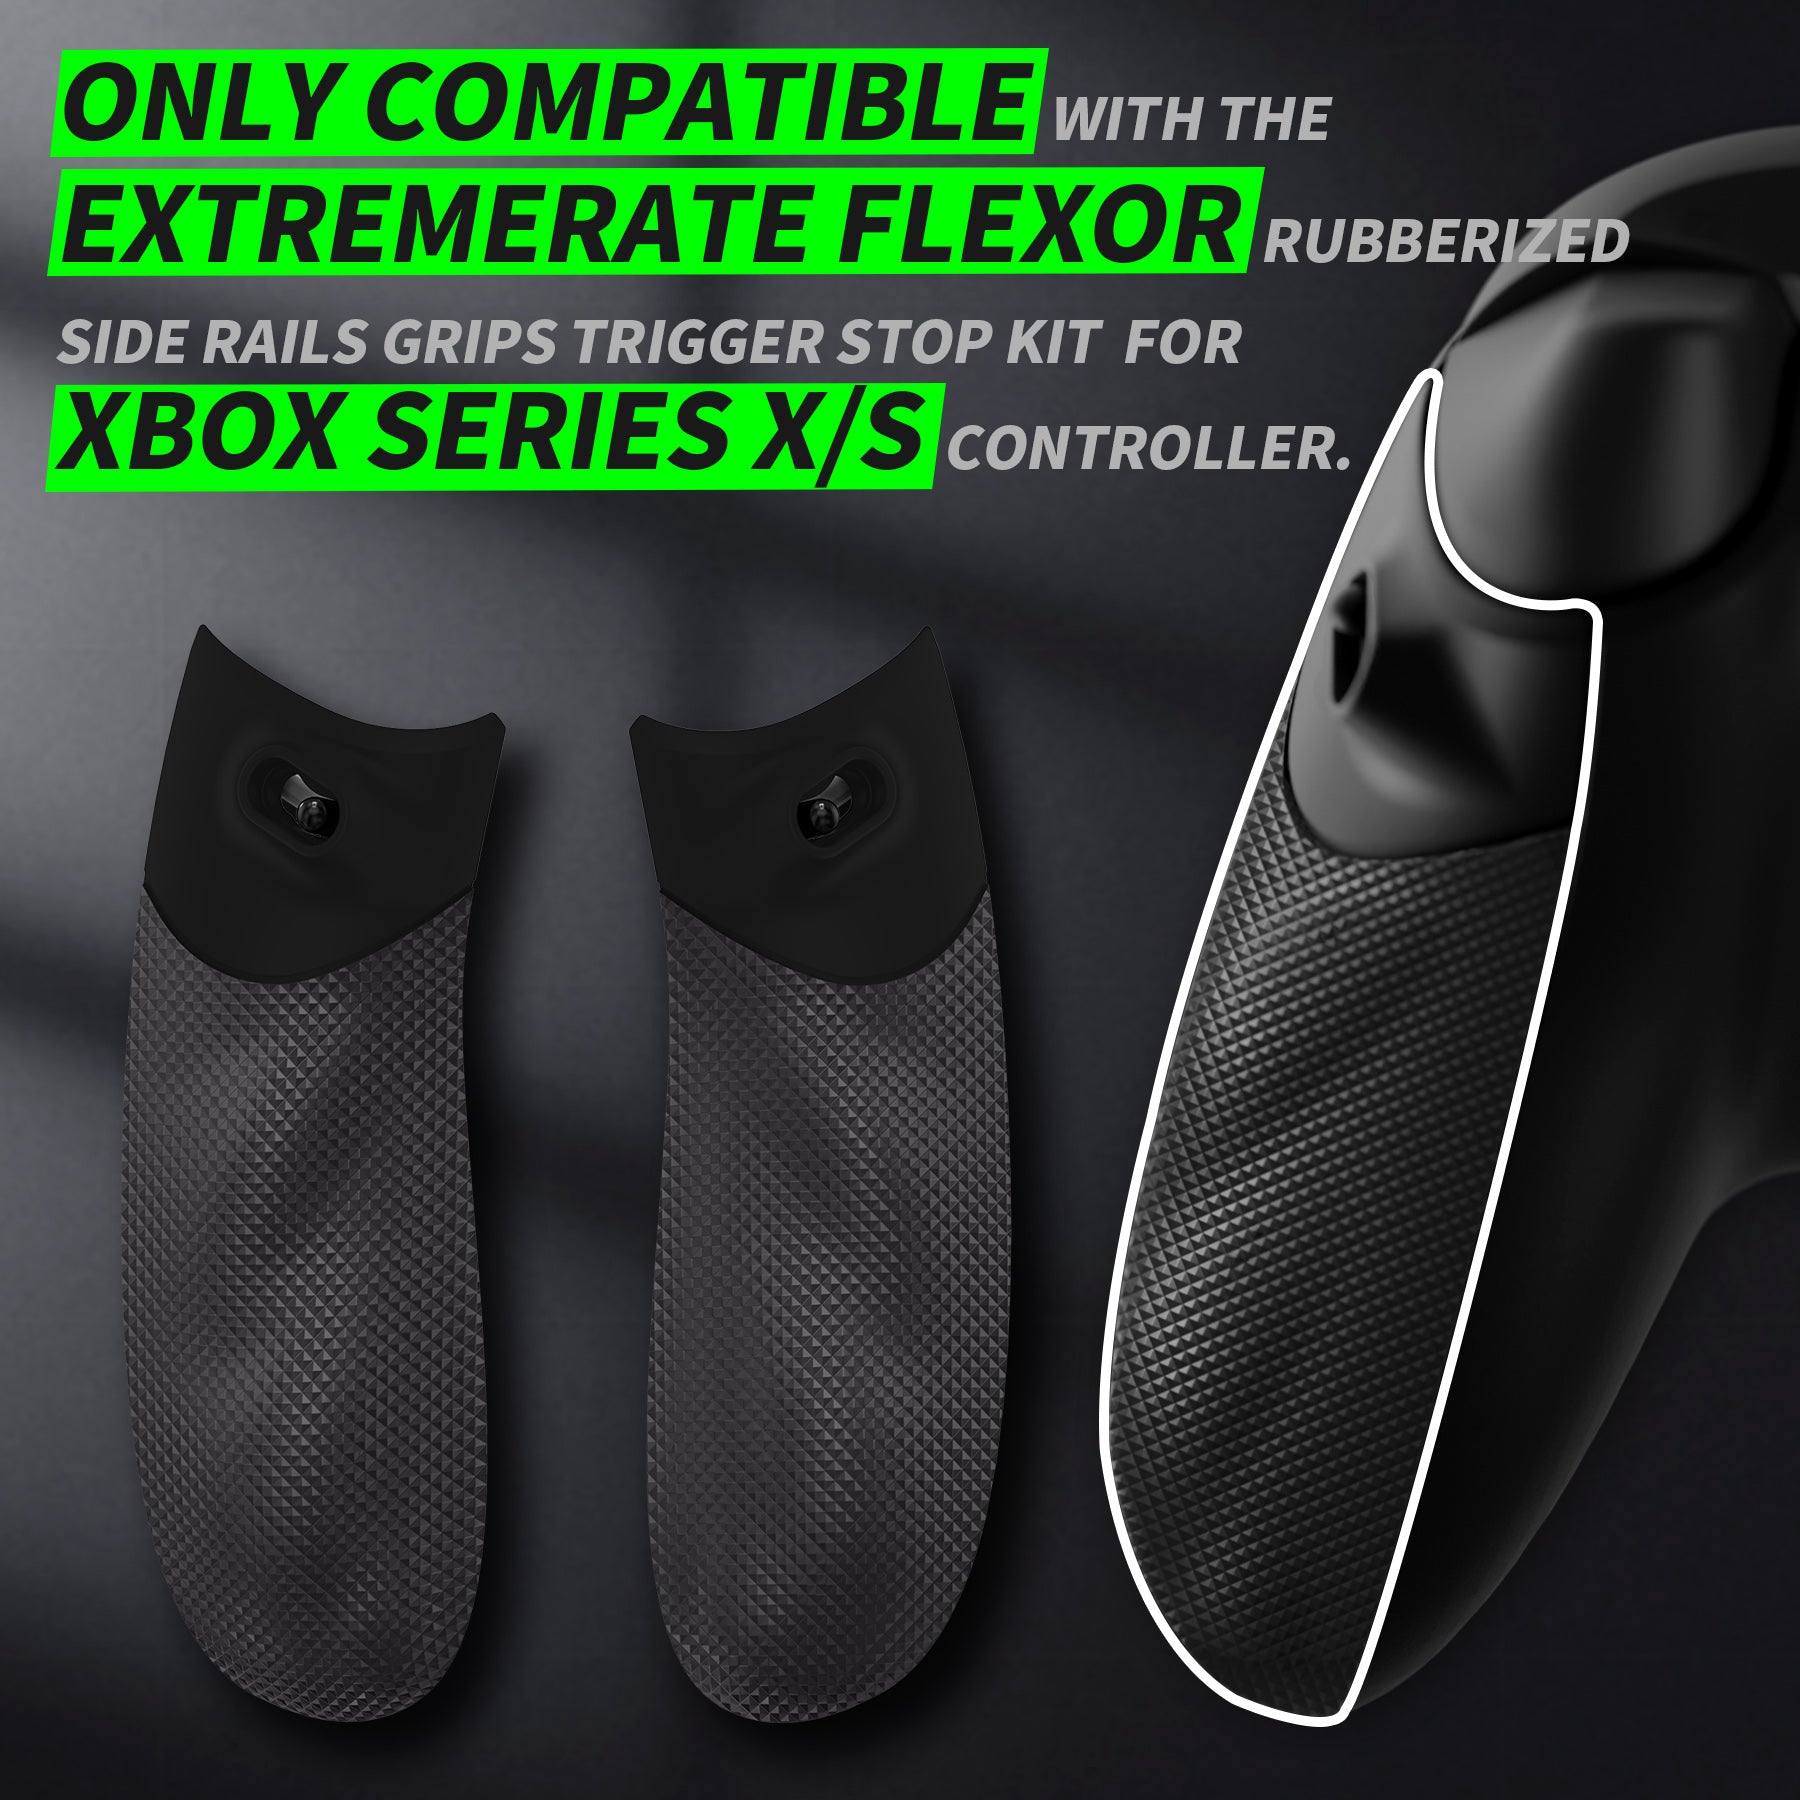 eXtremeRate Flexor Rubberized Side Rails Grips Trigger Stop Kit for Xbox Series X/S Controller, Diamond Textured Black Anti-Slip Ergonomic Trigger